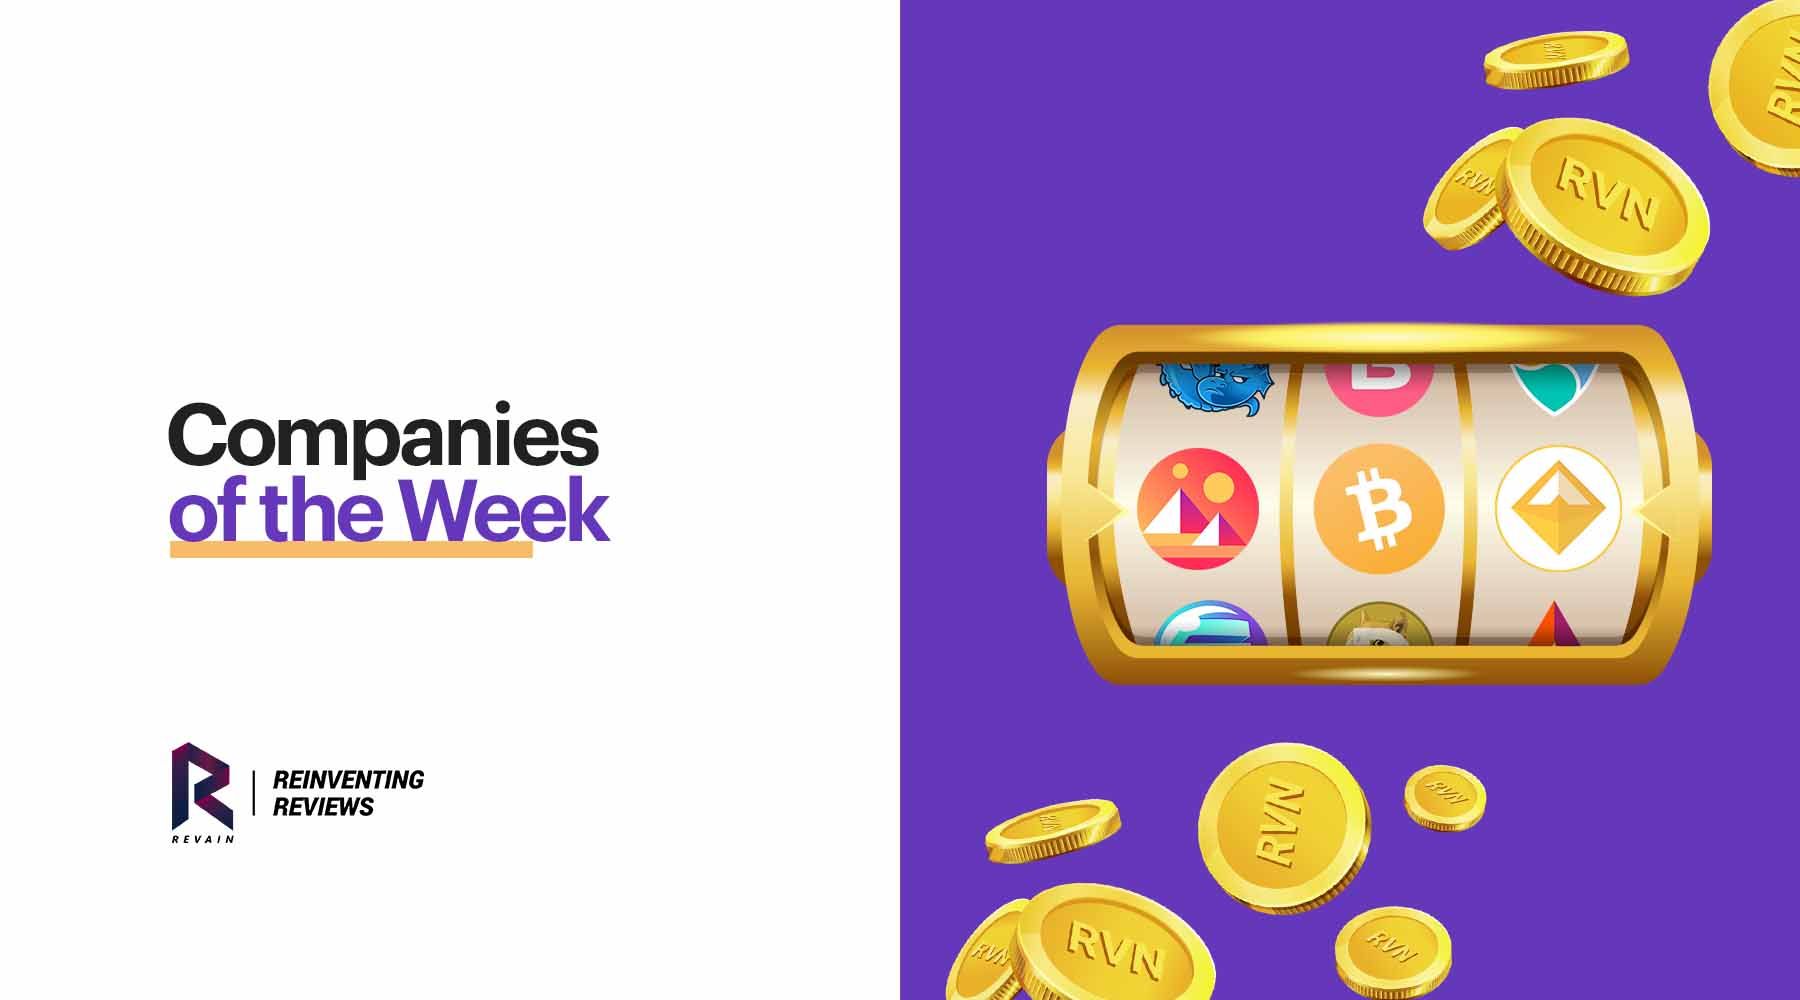 'Companies of the week' on Revain